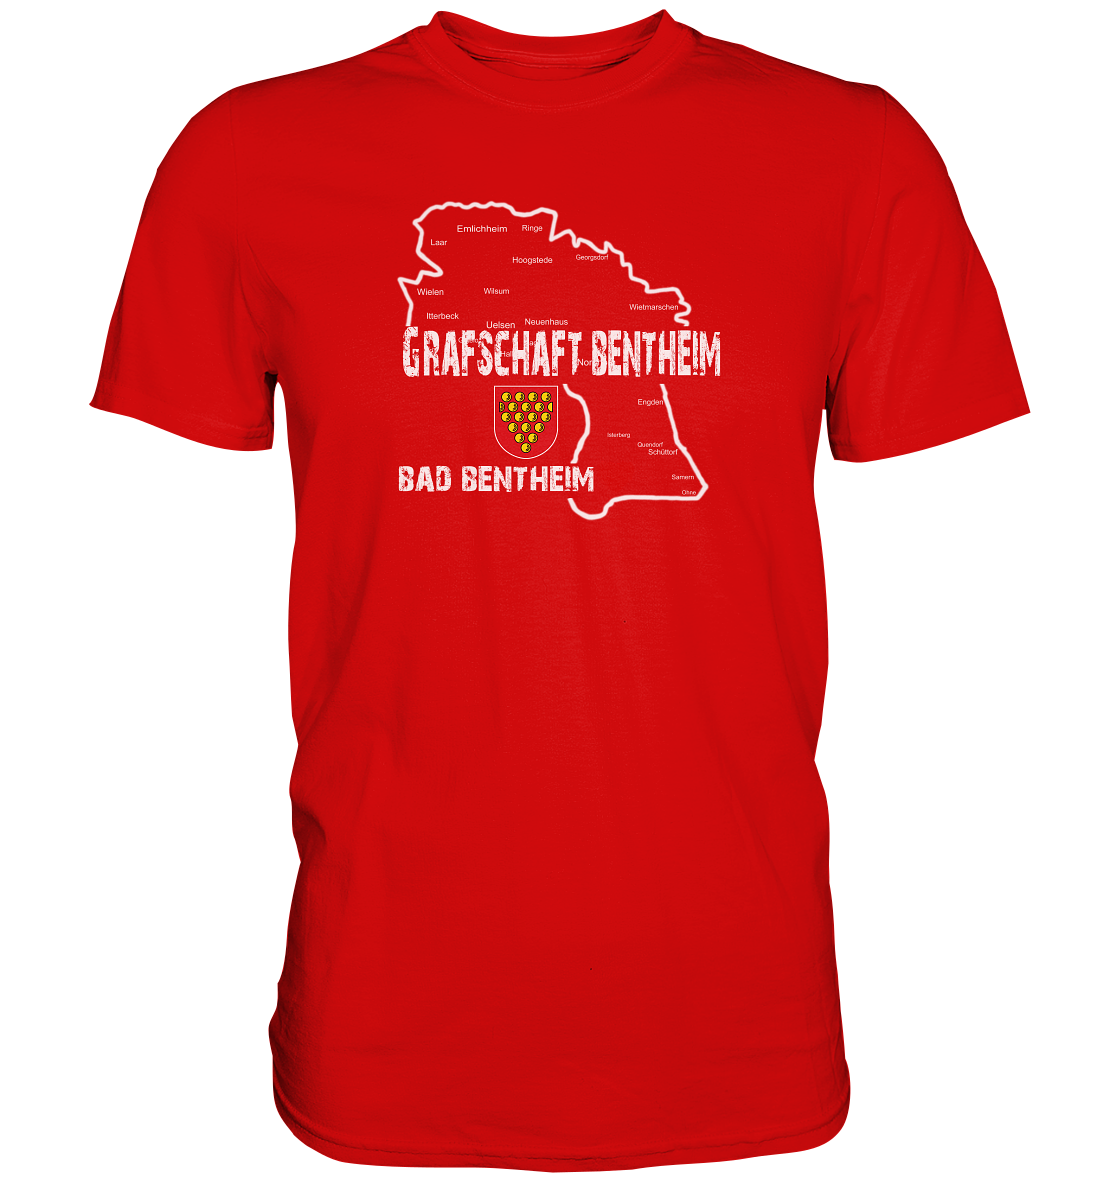 Hometown Shirt "Bad Bentheim" - Premium Shirt